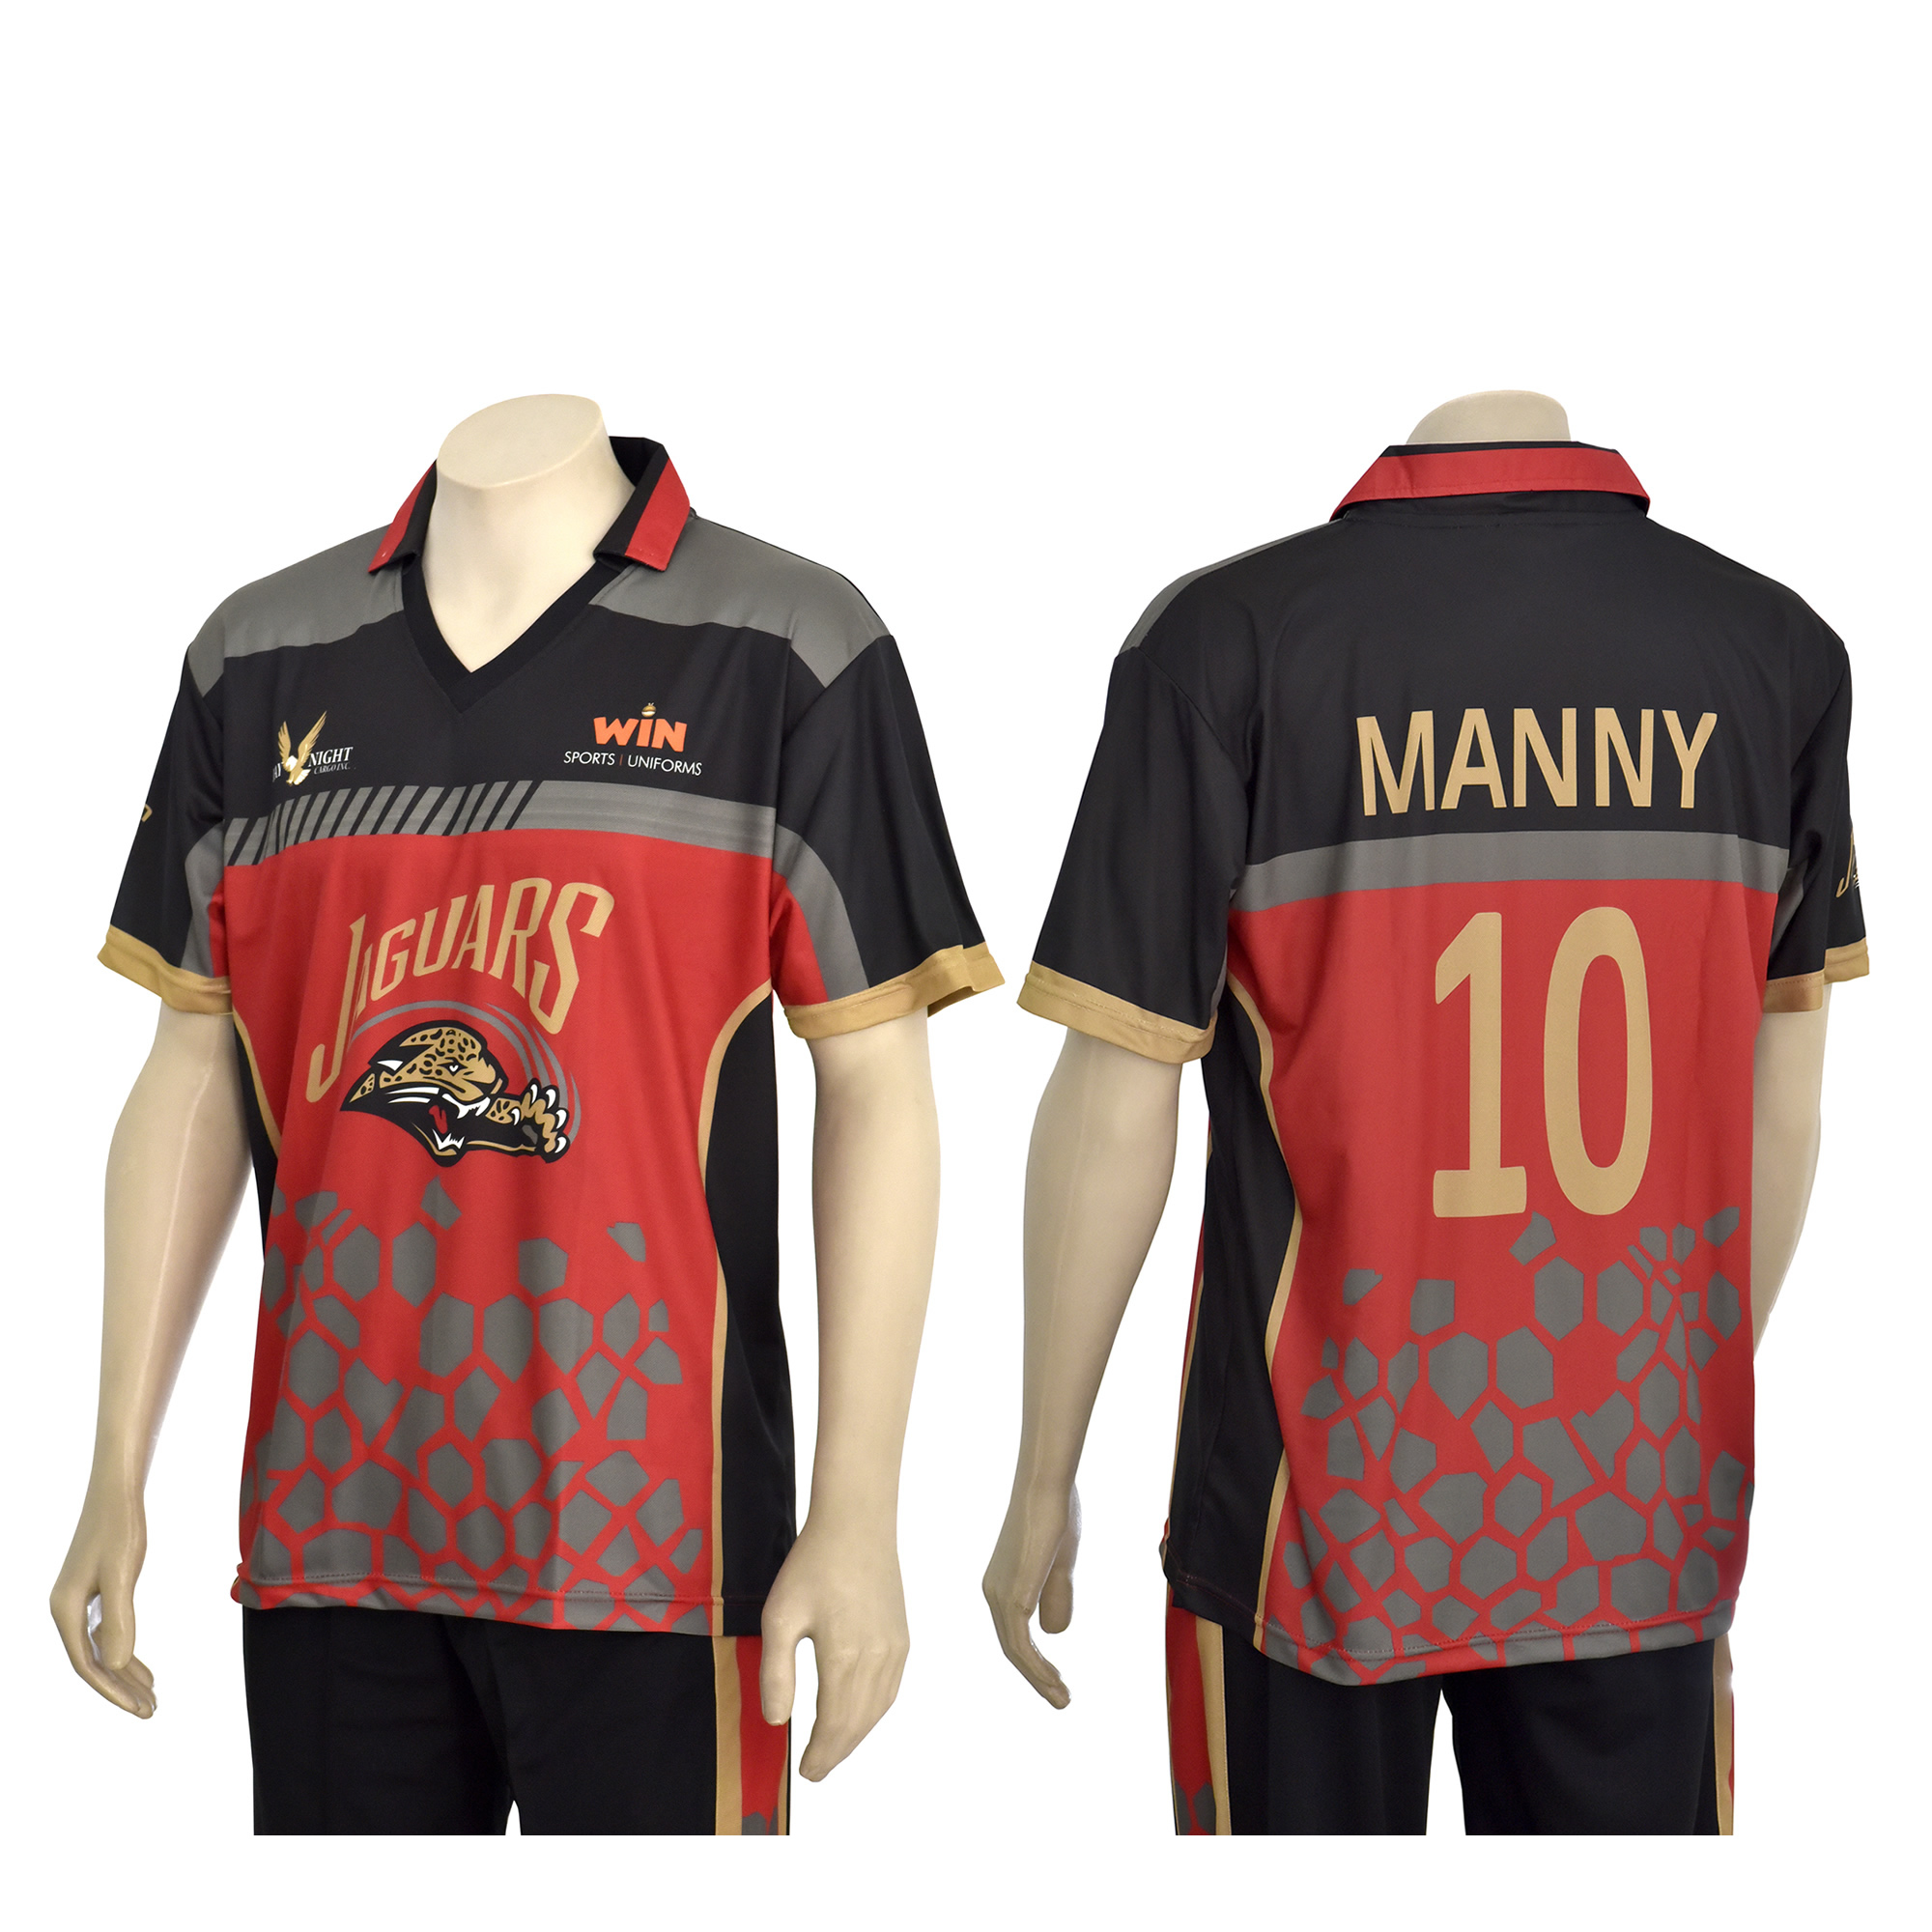 cricket uniform design